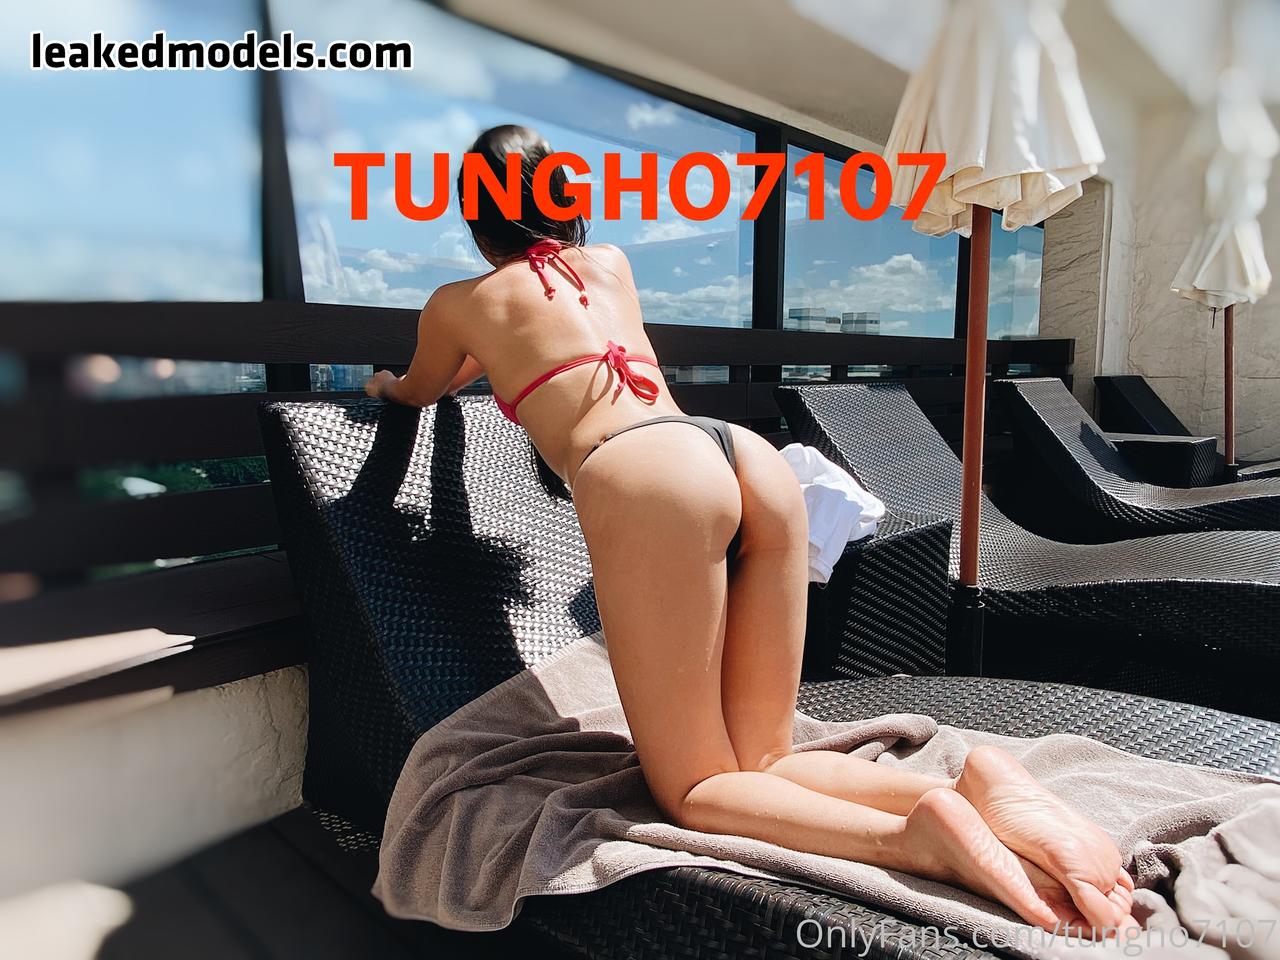 tungho7107 nude leaks leakedmodels.com 014 - Tungho7107 Nude (17 Photos + 2 Videos)